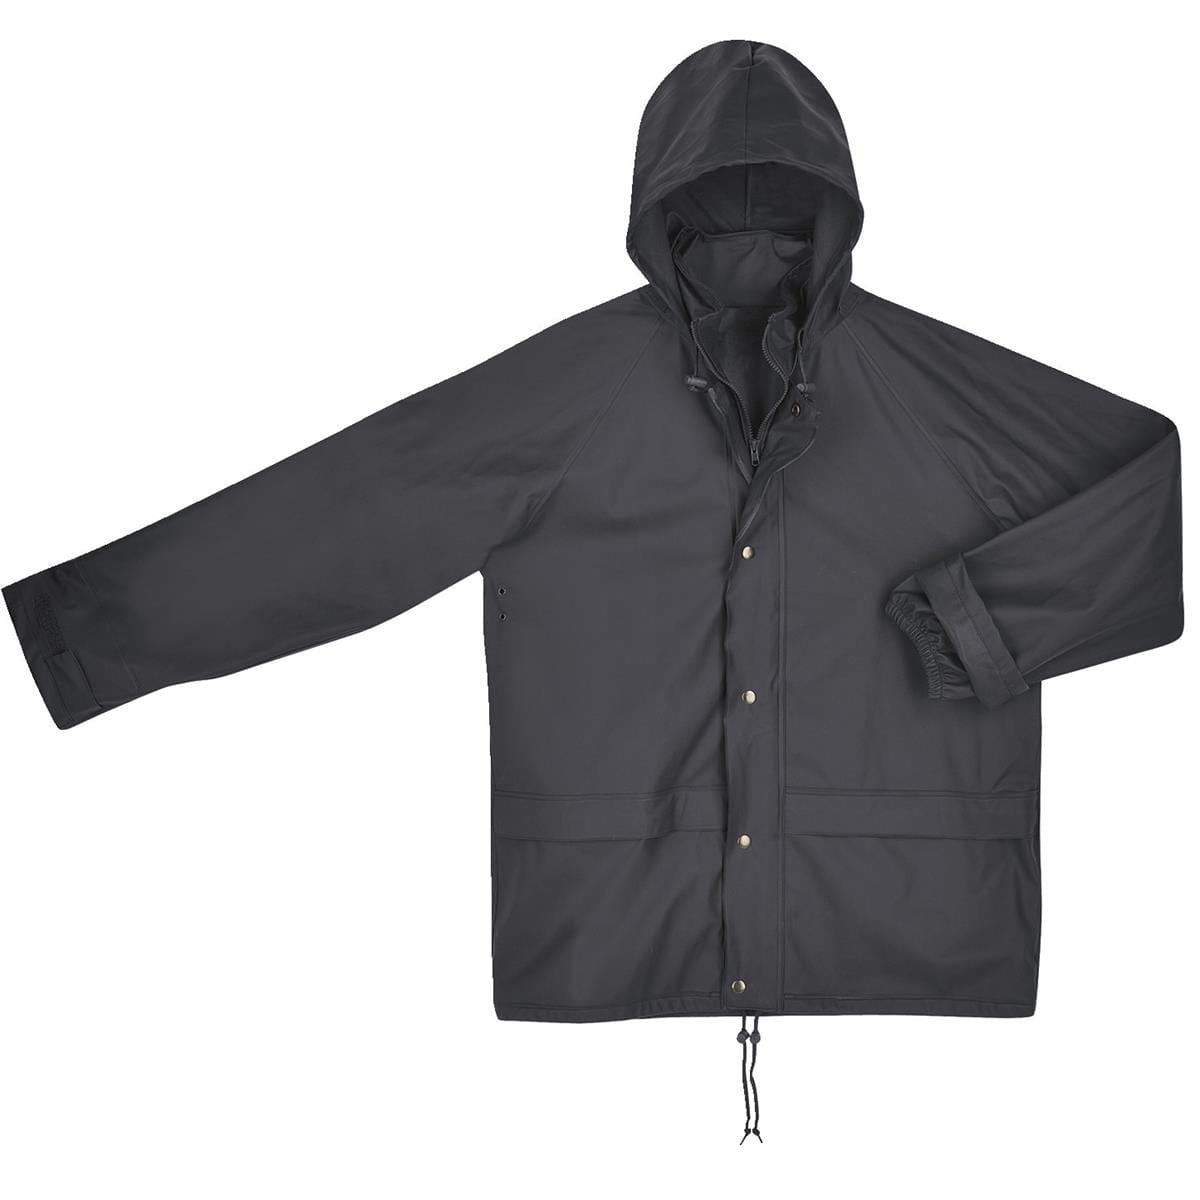 Waterproof pvc fashion rain coat To Keep You Warm and Safe